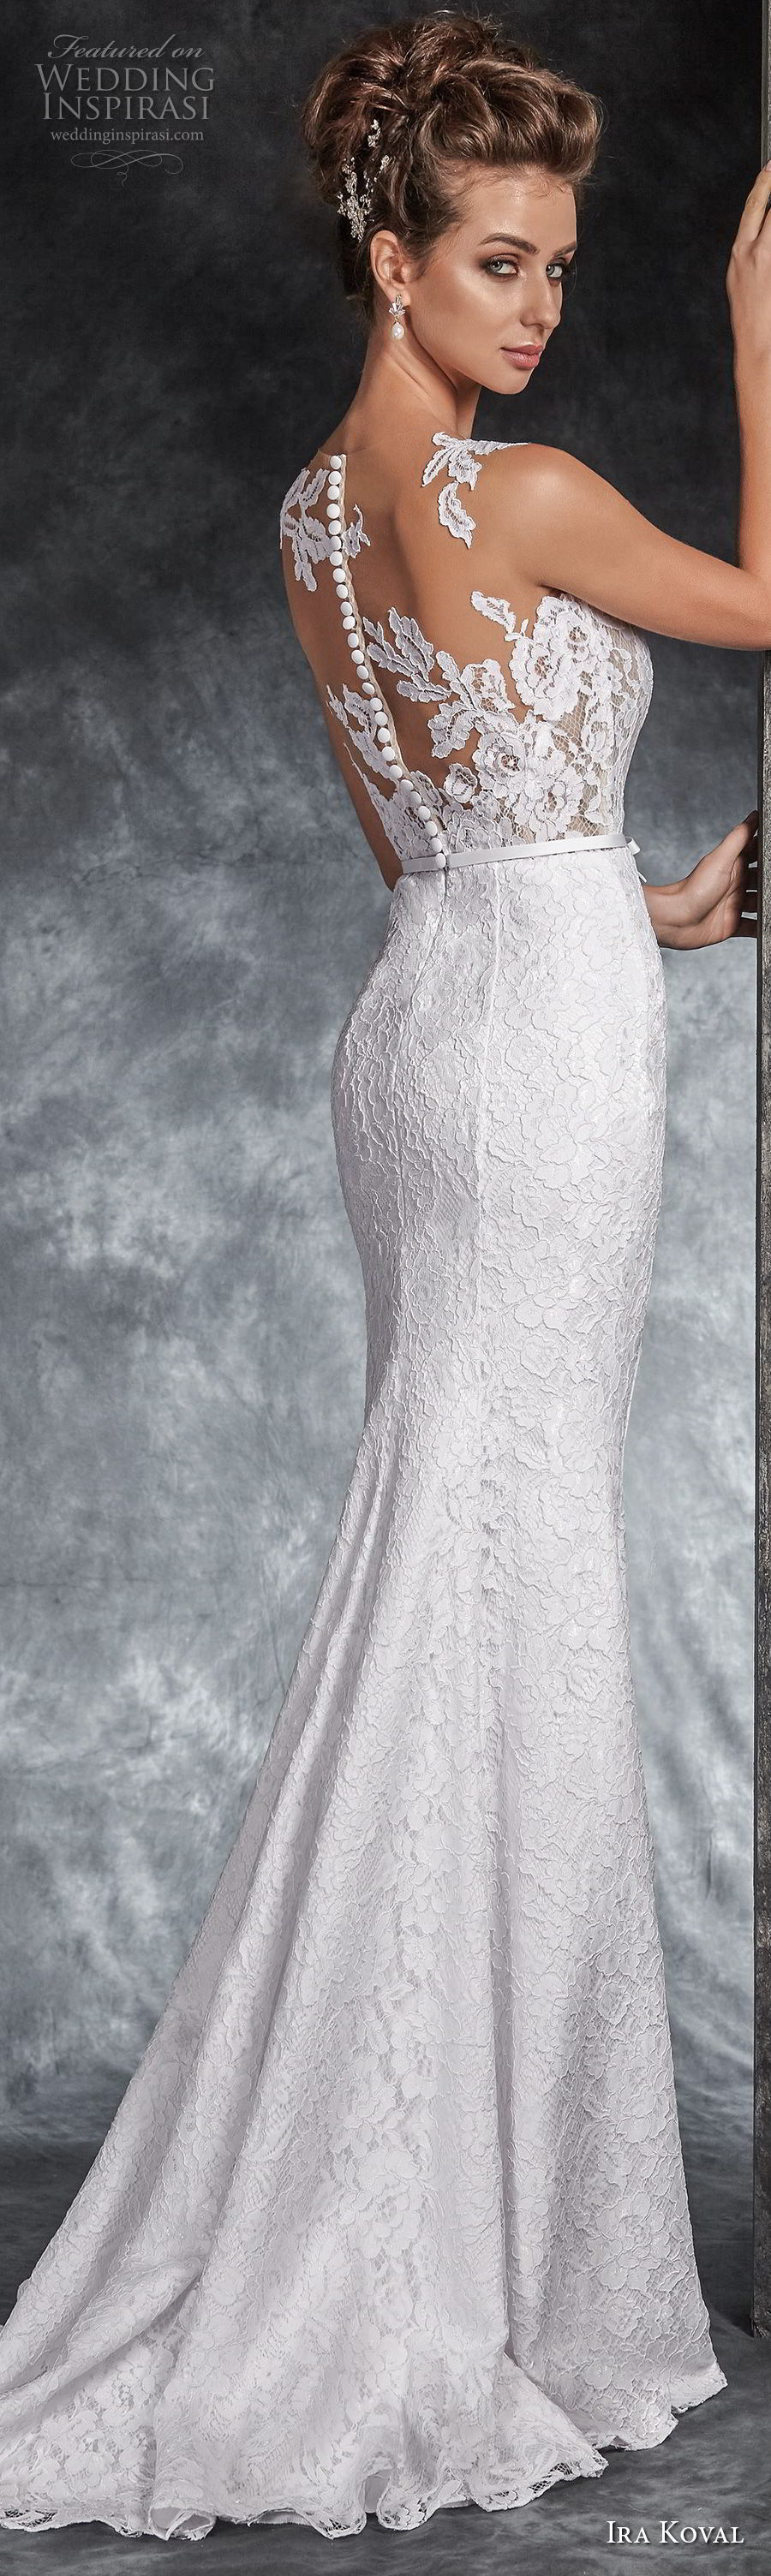 ira koval 2017 bridal sleeveless illusion jewel sweetheart neckline full embellishment elegant sheath wedding dress lace button back sweep train (611) bv